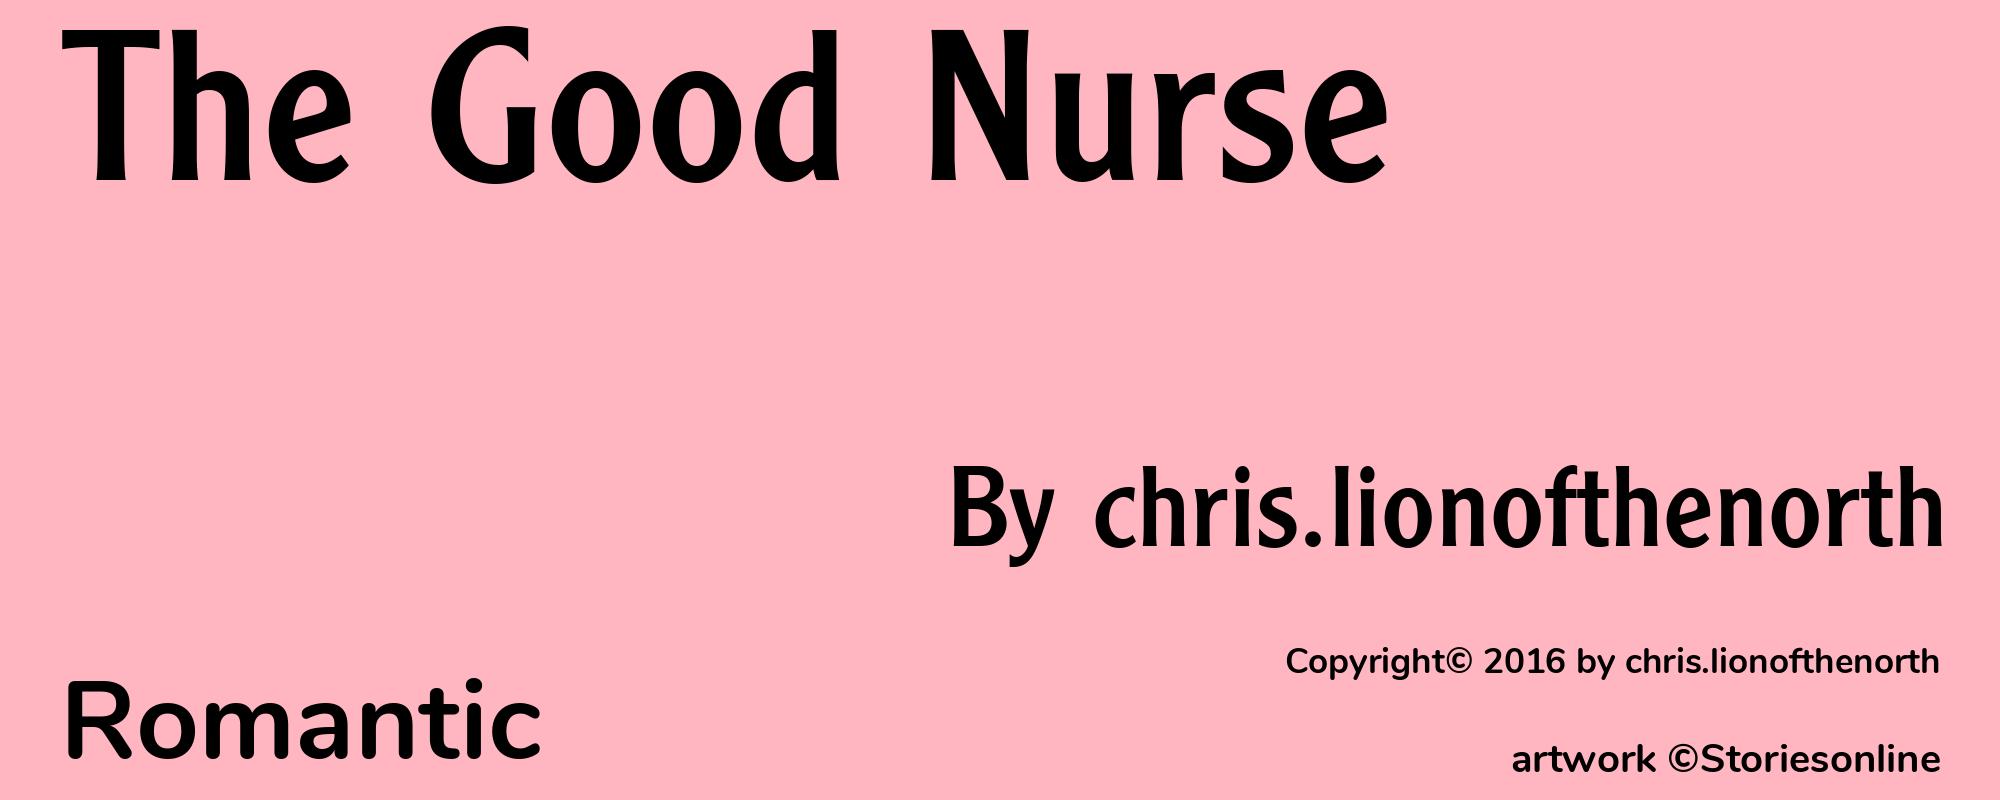 The Good Nurse - Cover